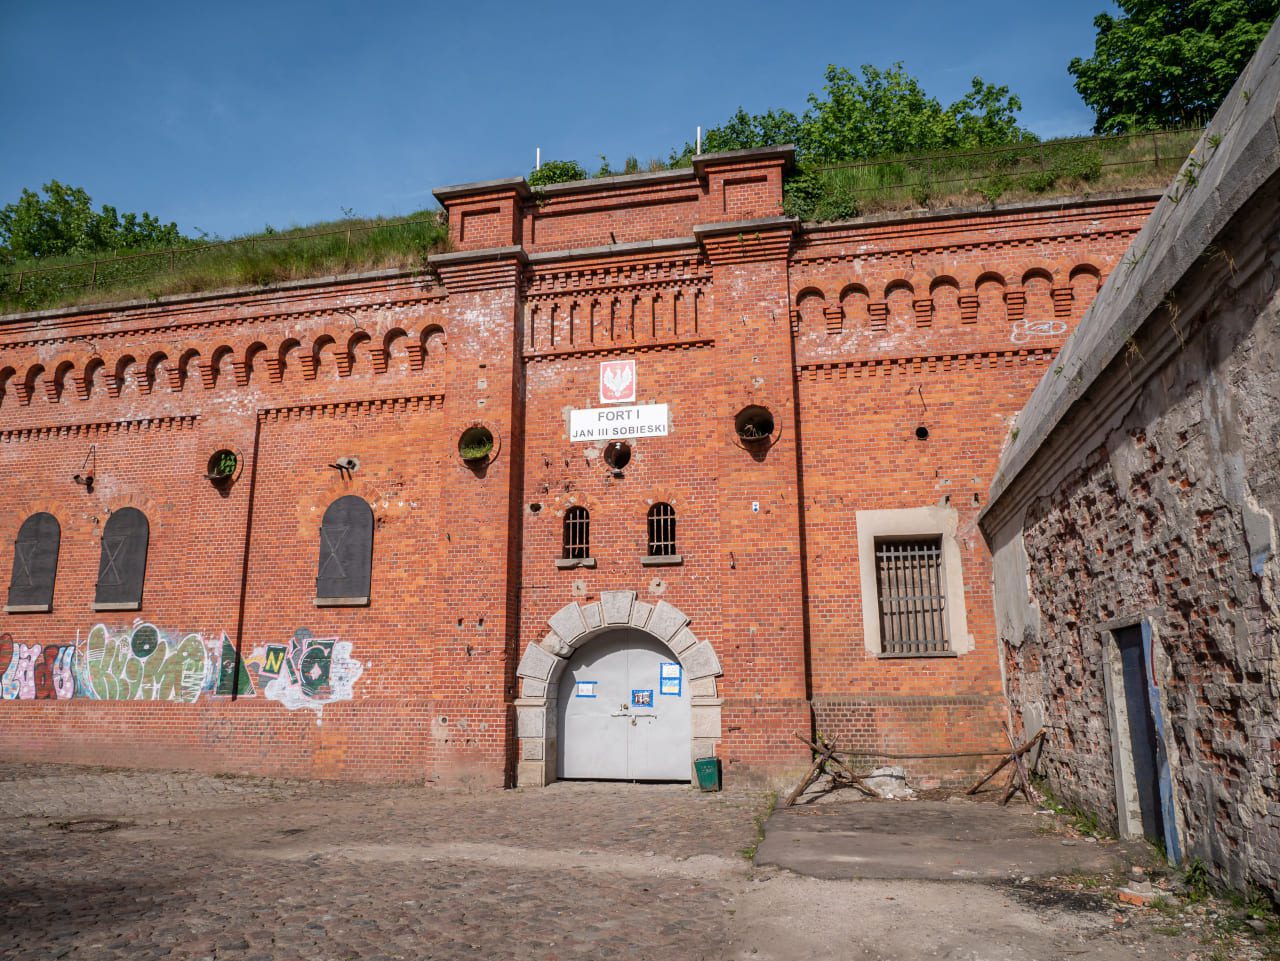 Toruń Fort I Jan III Sobieski